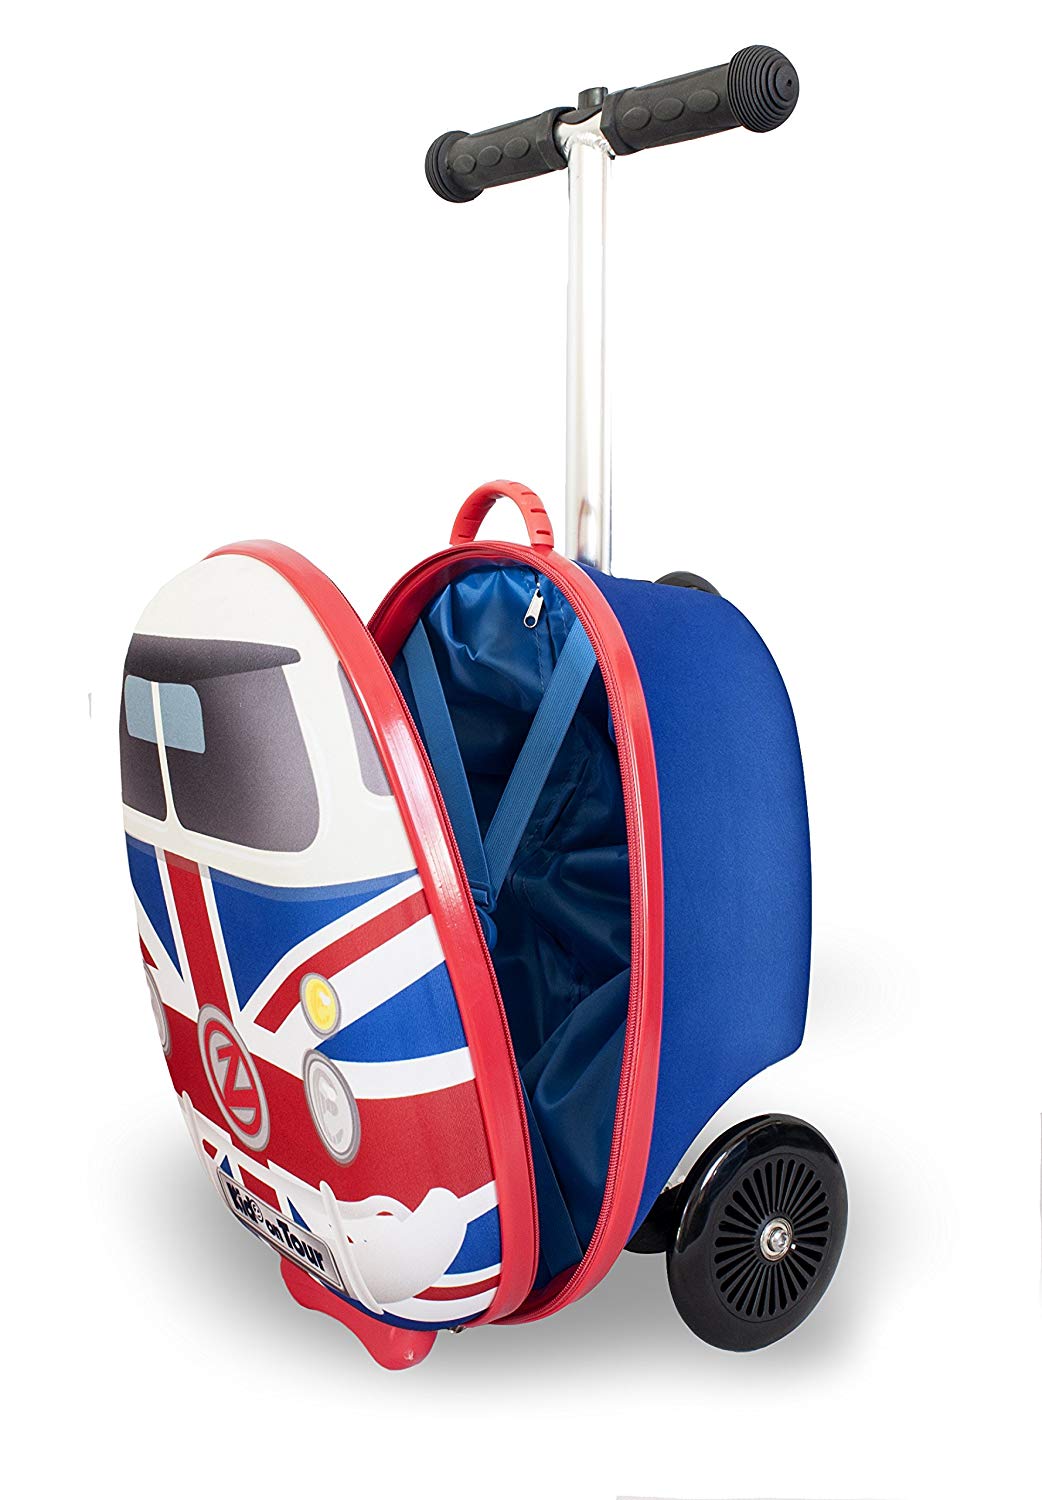 Самокат-чемодан Union Jack Journeys 15", 21 литр  